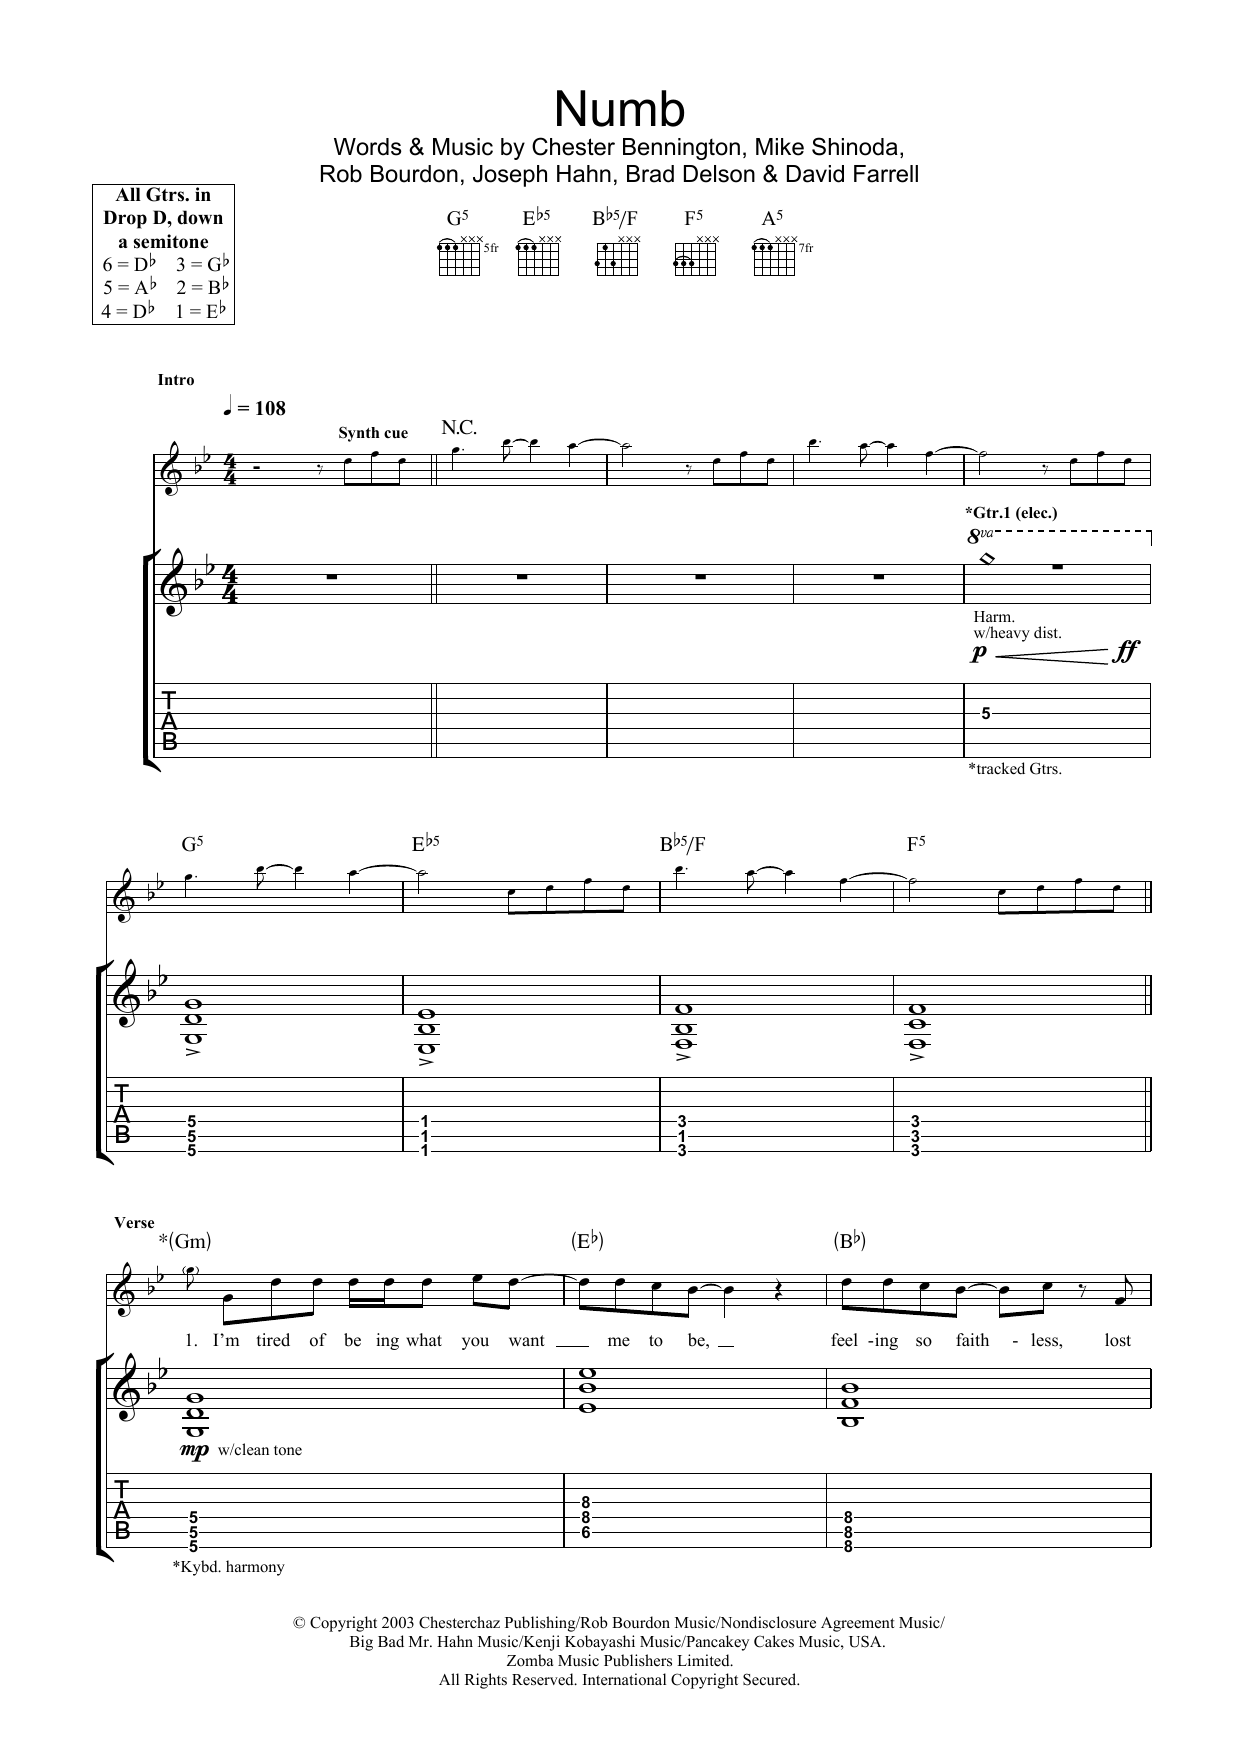 Linkin Park Numb Sheet Music Notes & Chords for Lyrics & Chords - Download or Print PDF